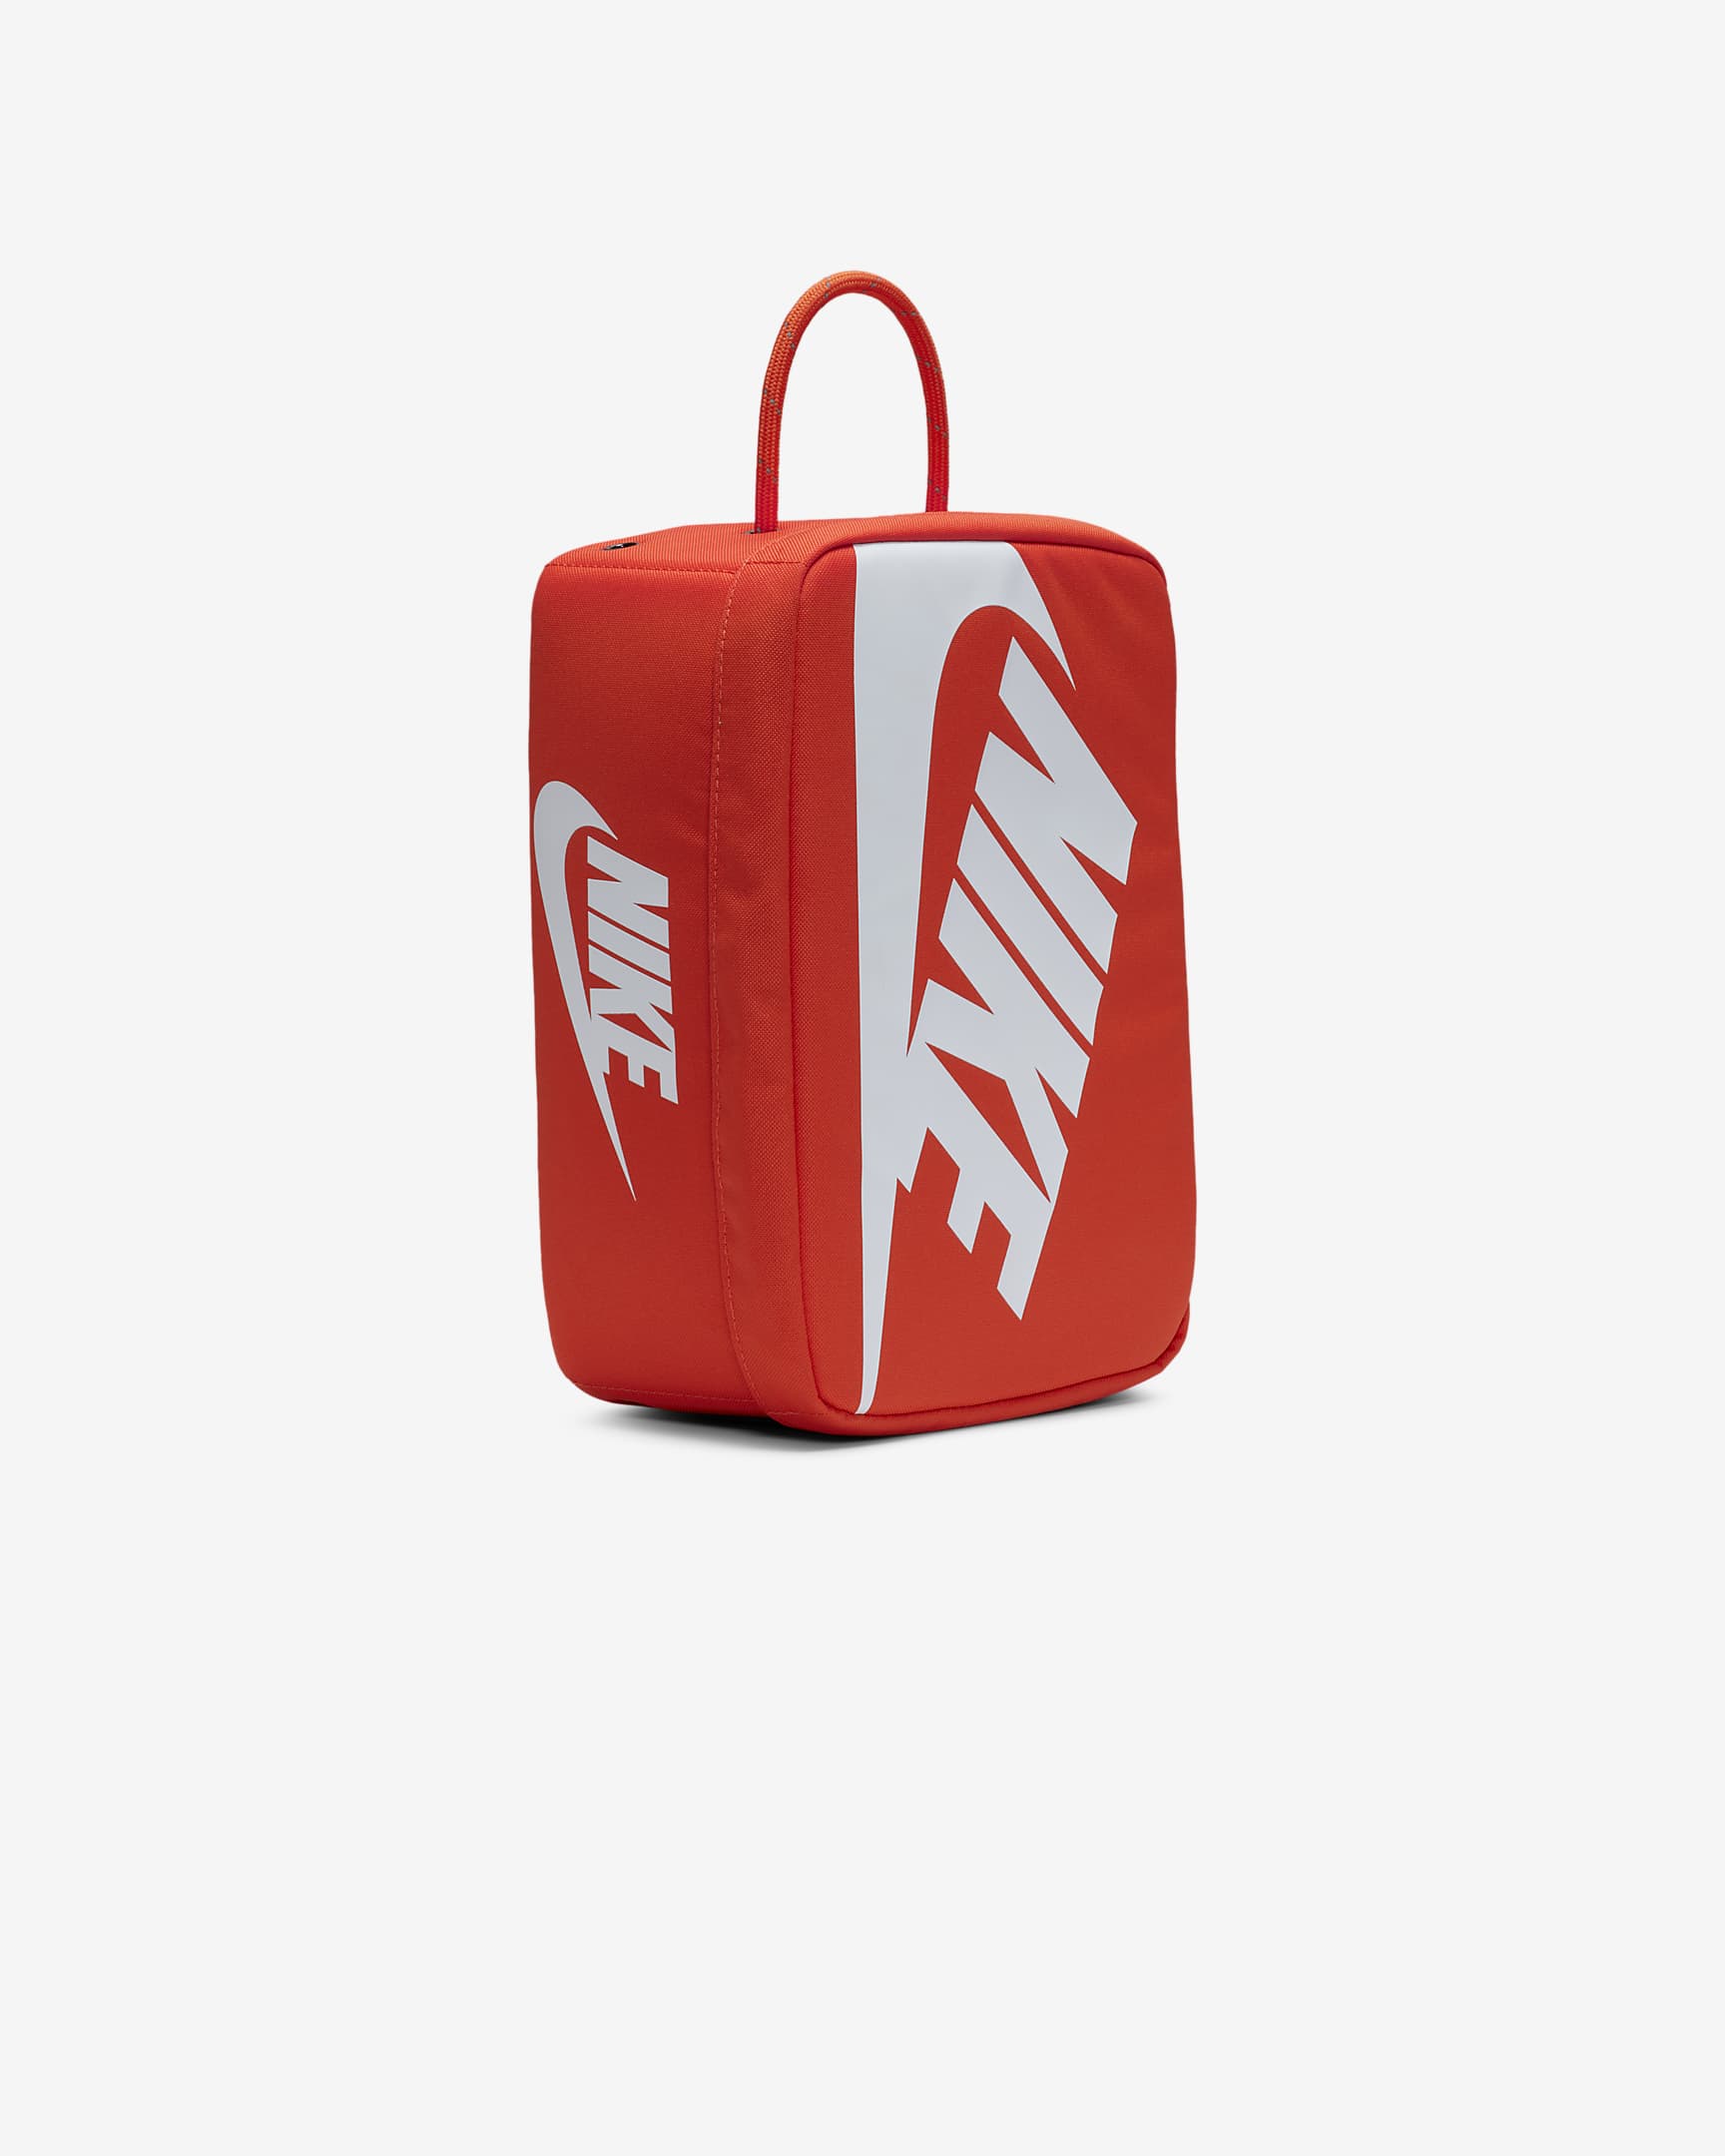 Nike Shoe Box Bag (Small, 8L) - Orange/Orange/White